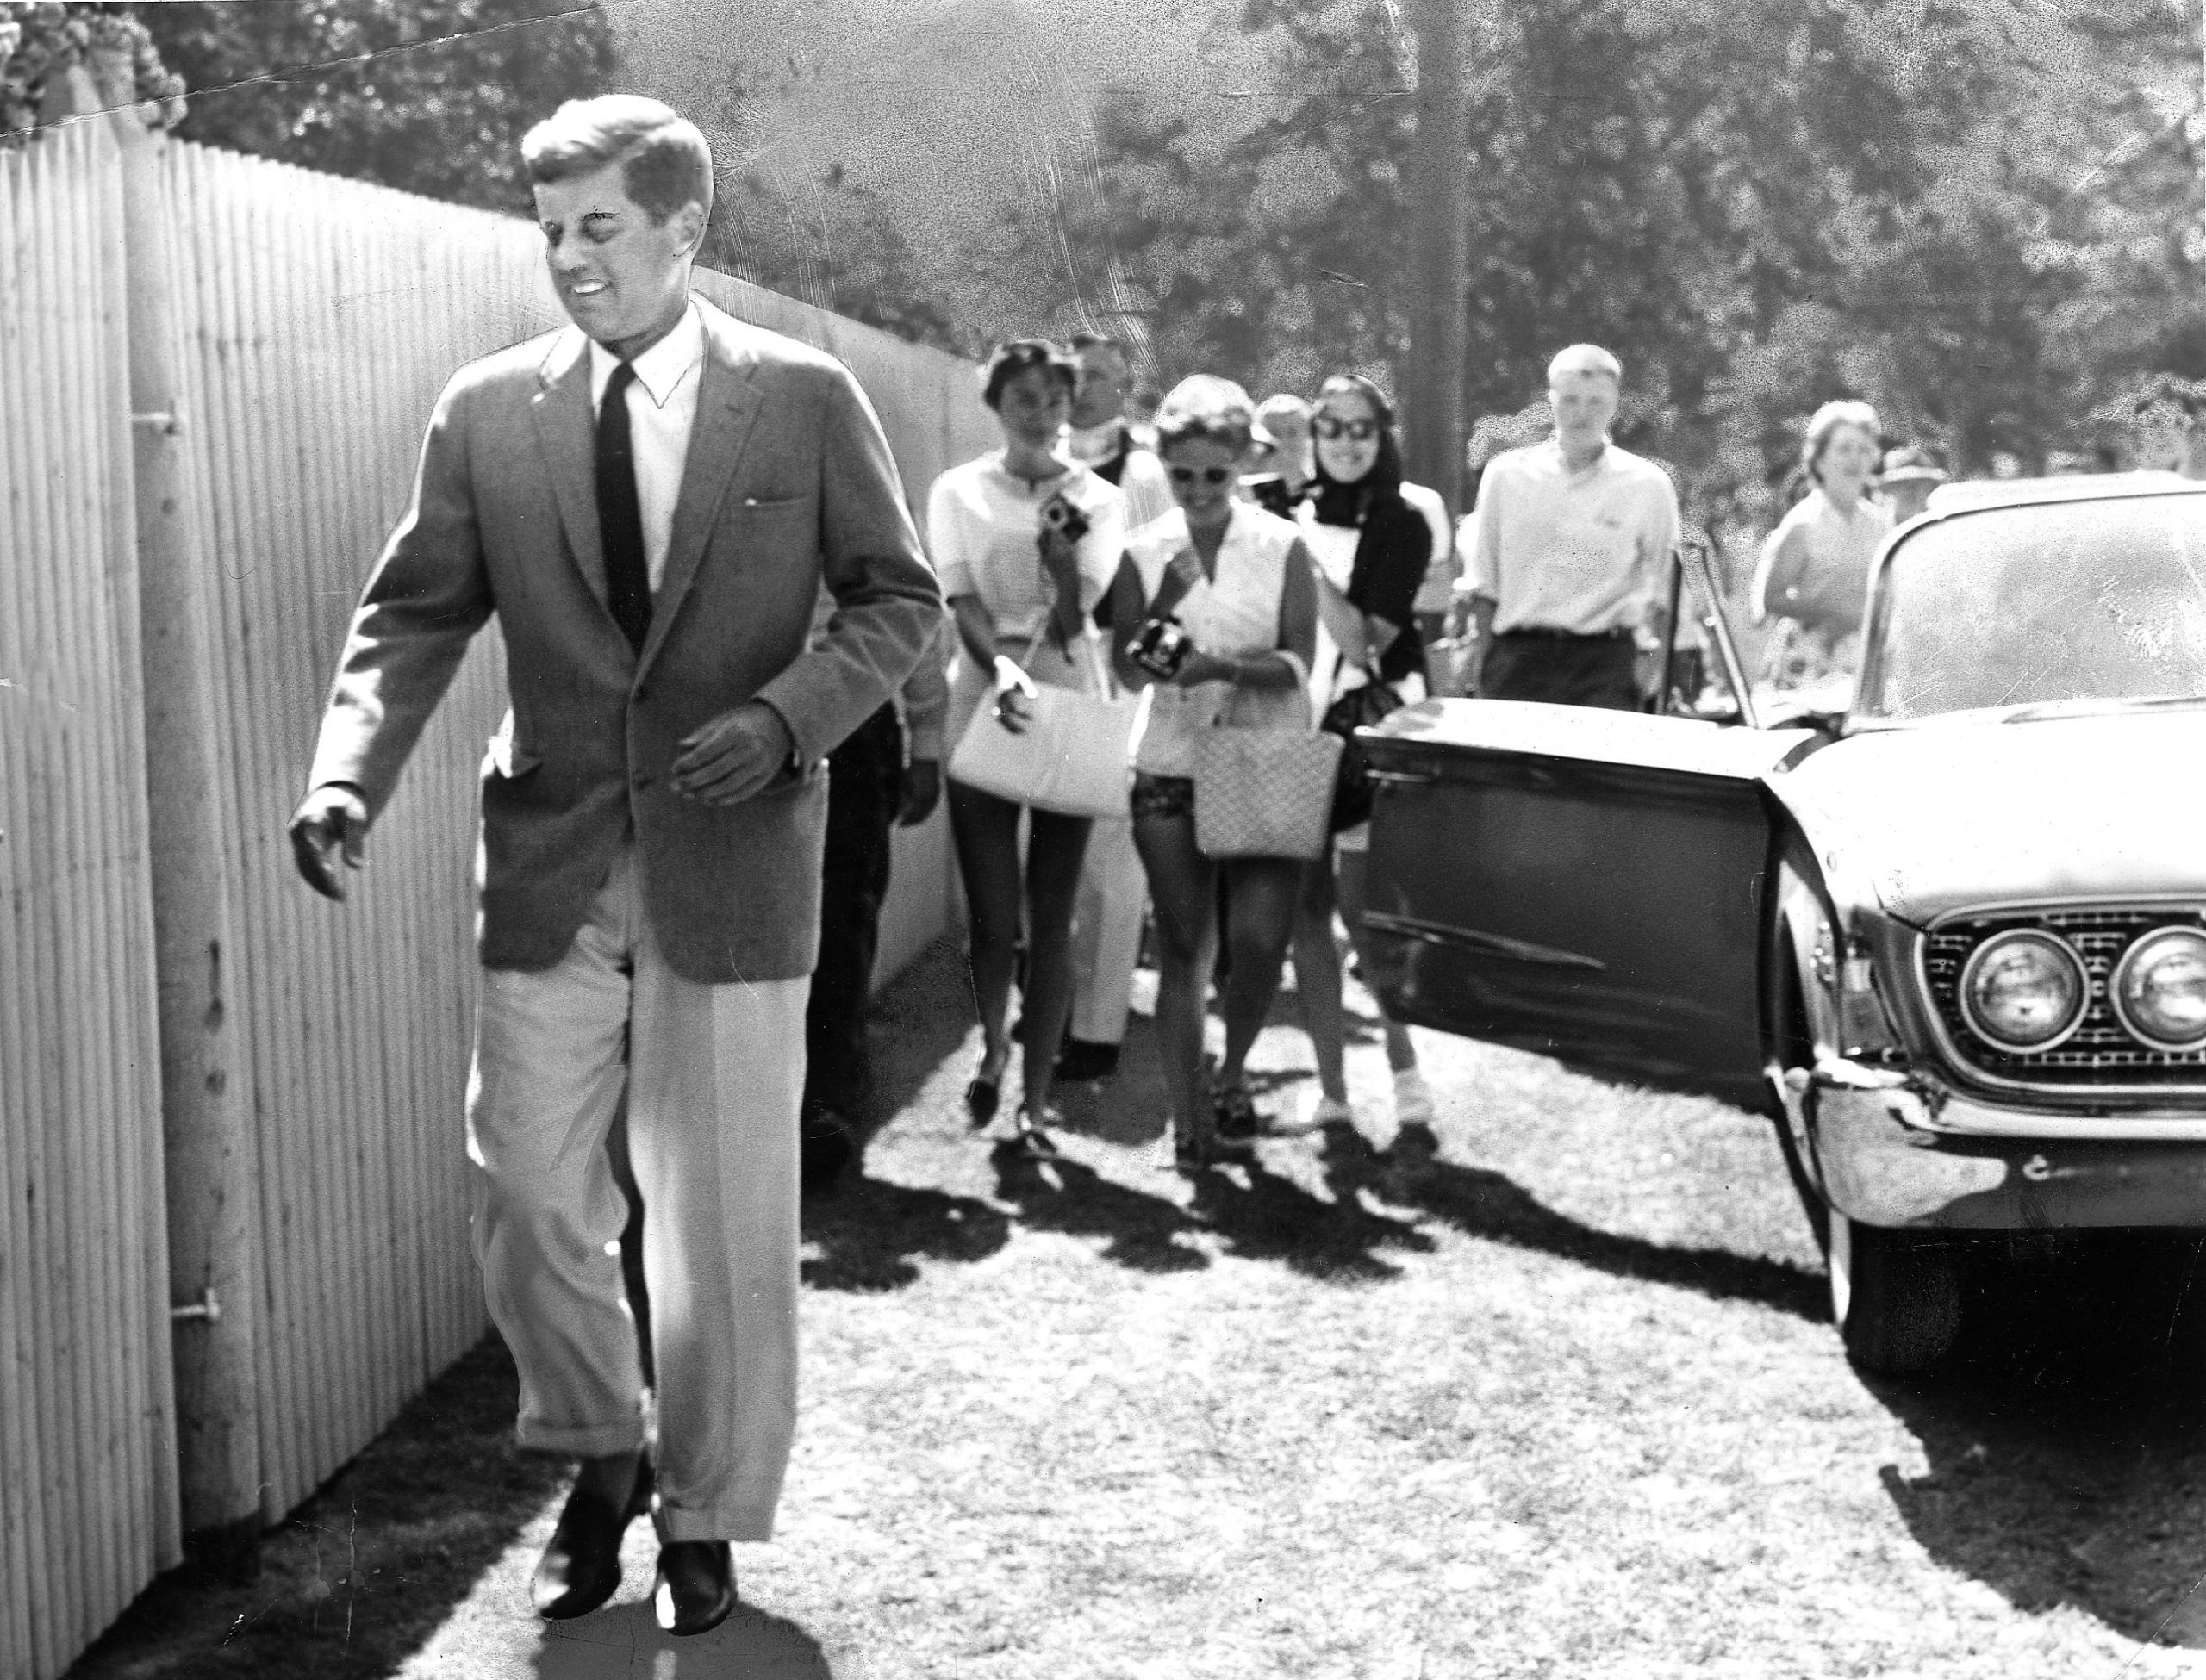 Dress Like JFK - John F. Kennedy Style